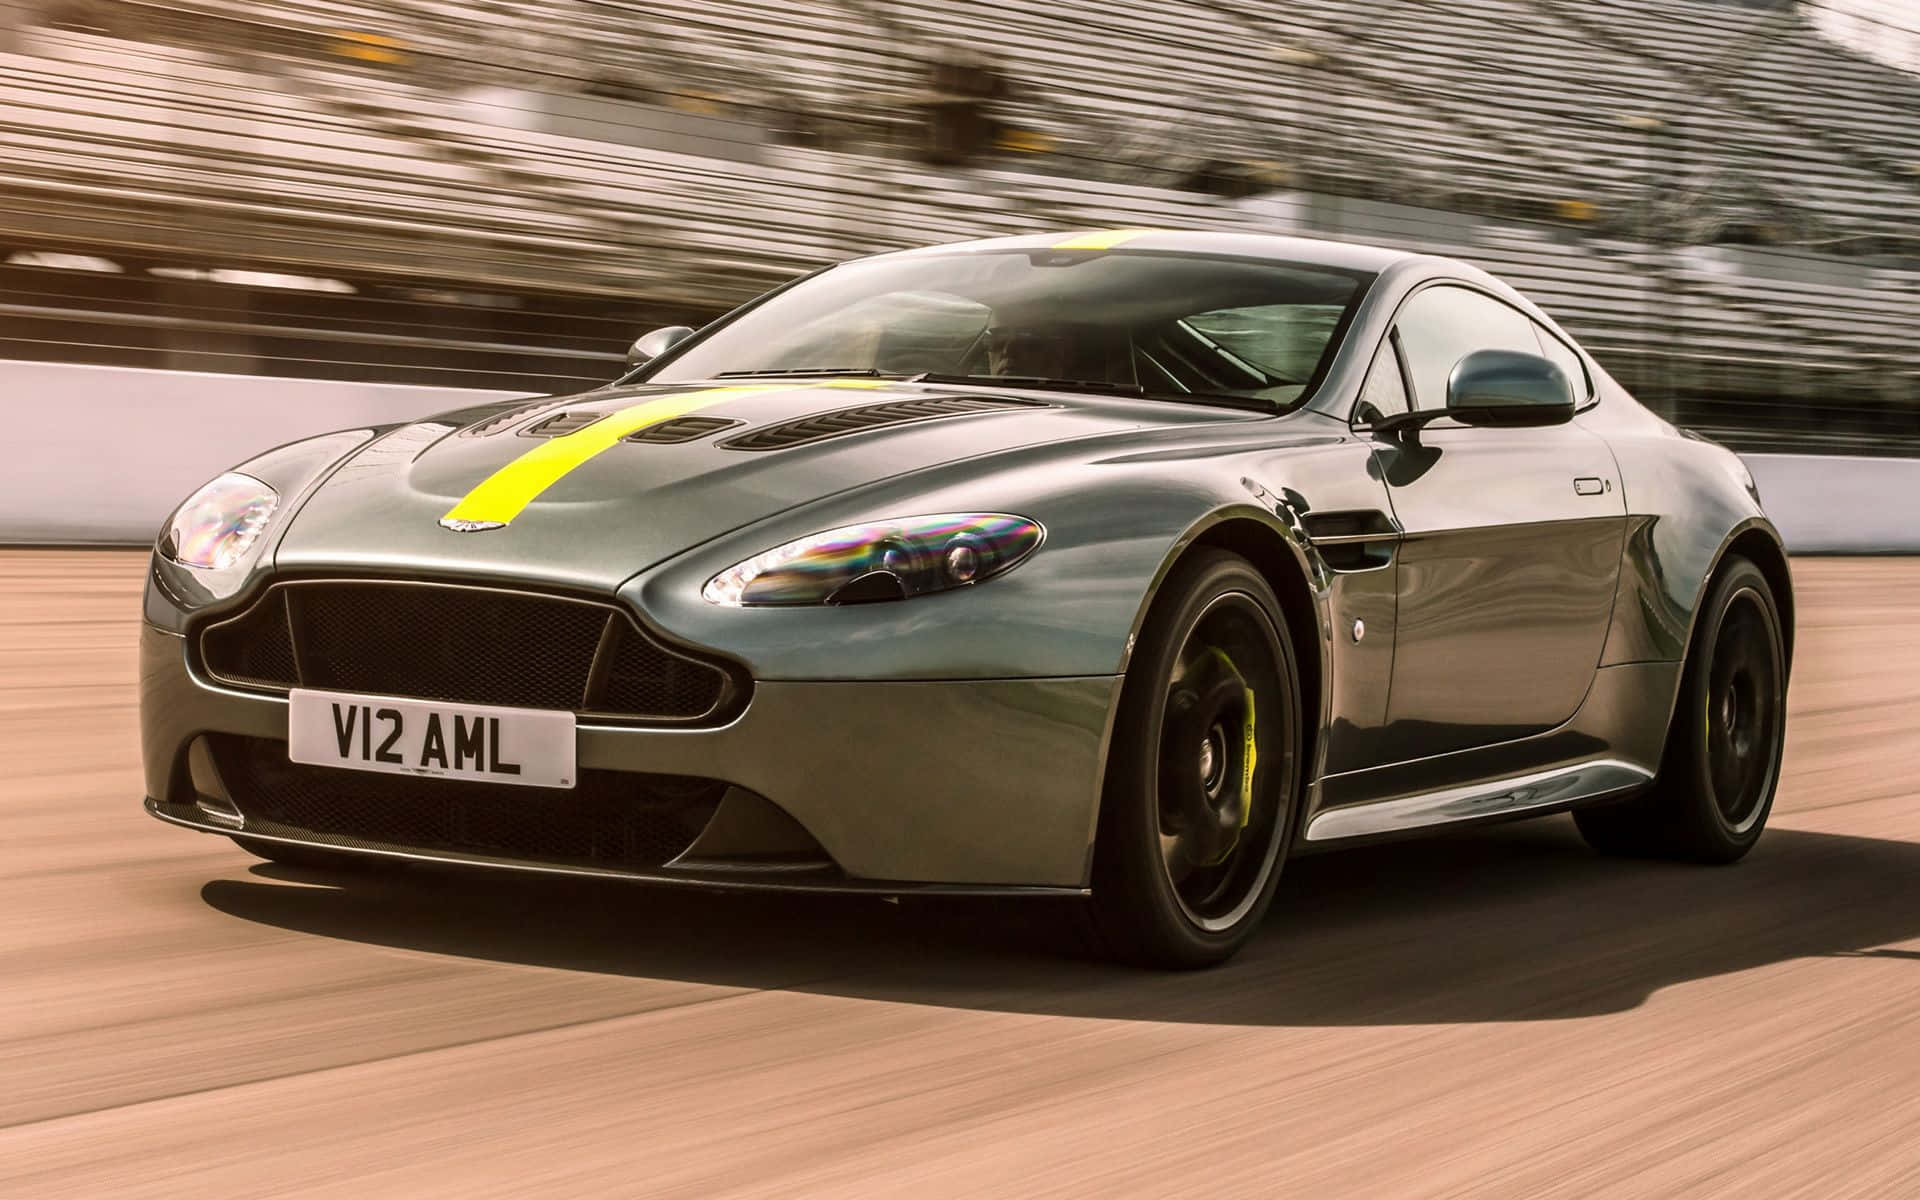 Sleek Aston Martin V12 Vantage showcasing its power and elegance Wallpaper